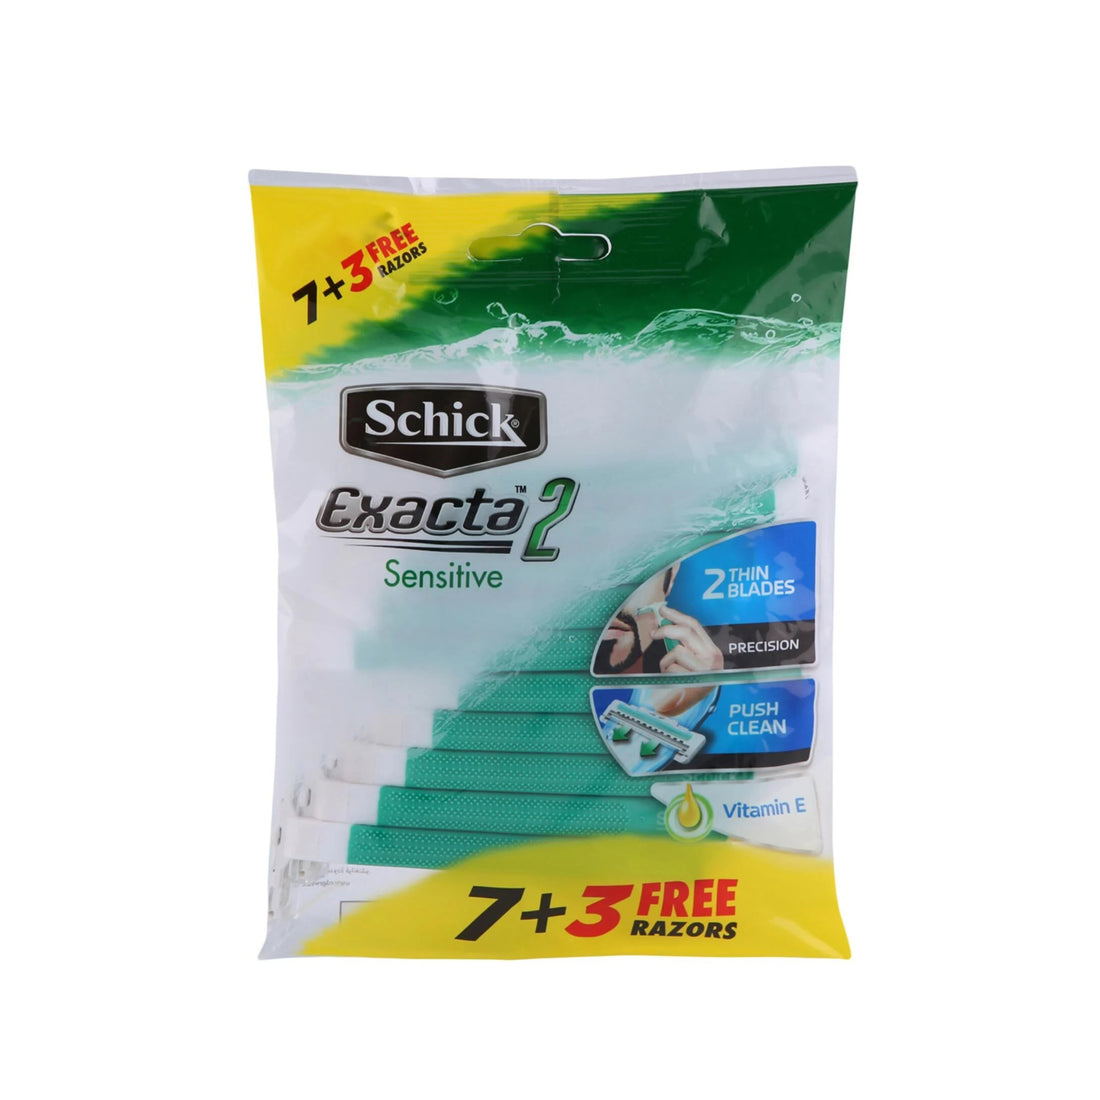 Schick Exacta 2 Sensitive Disposable Razor with Vitamin E (7+3)